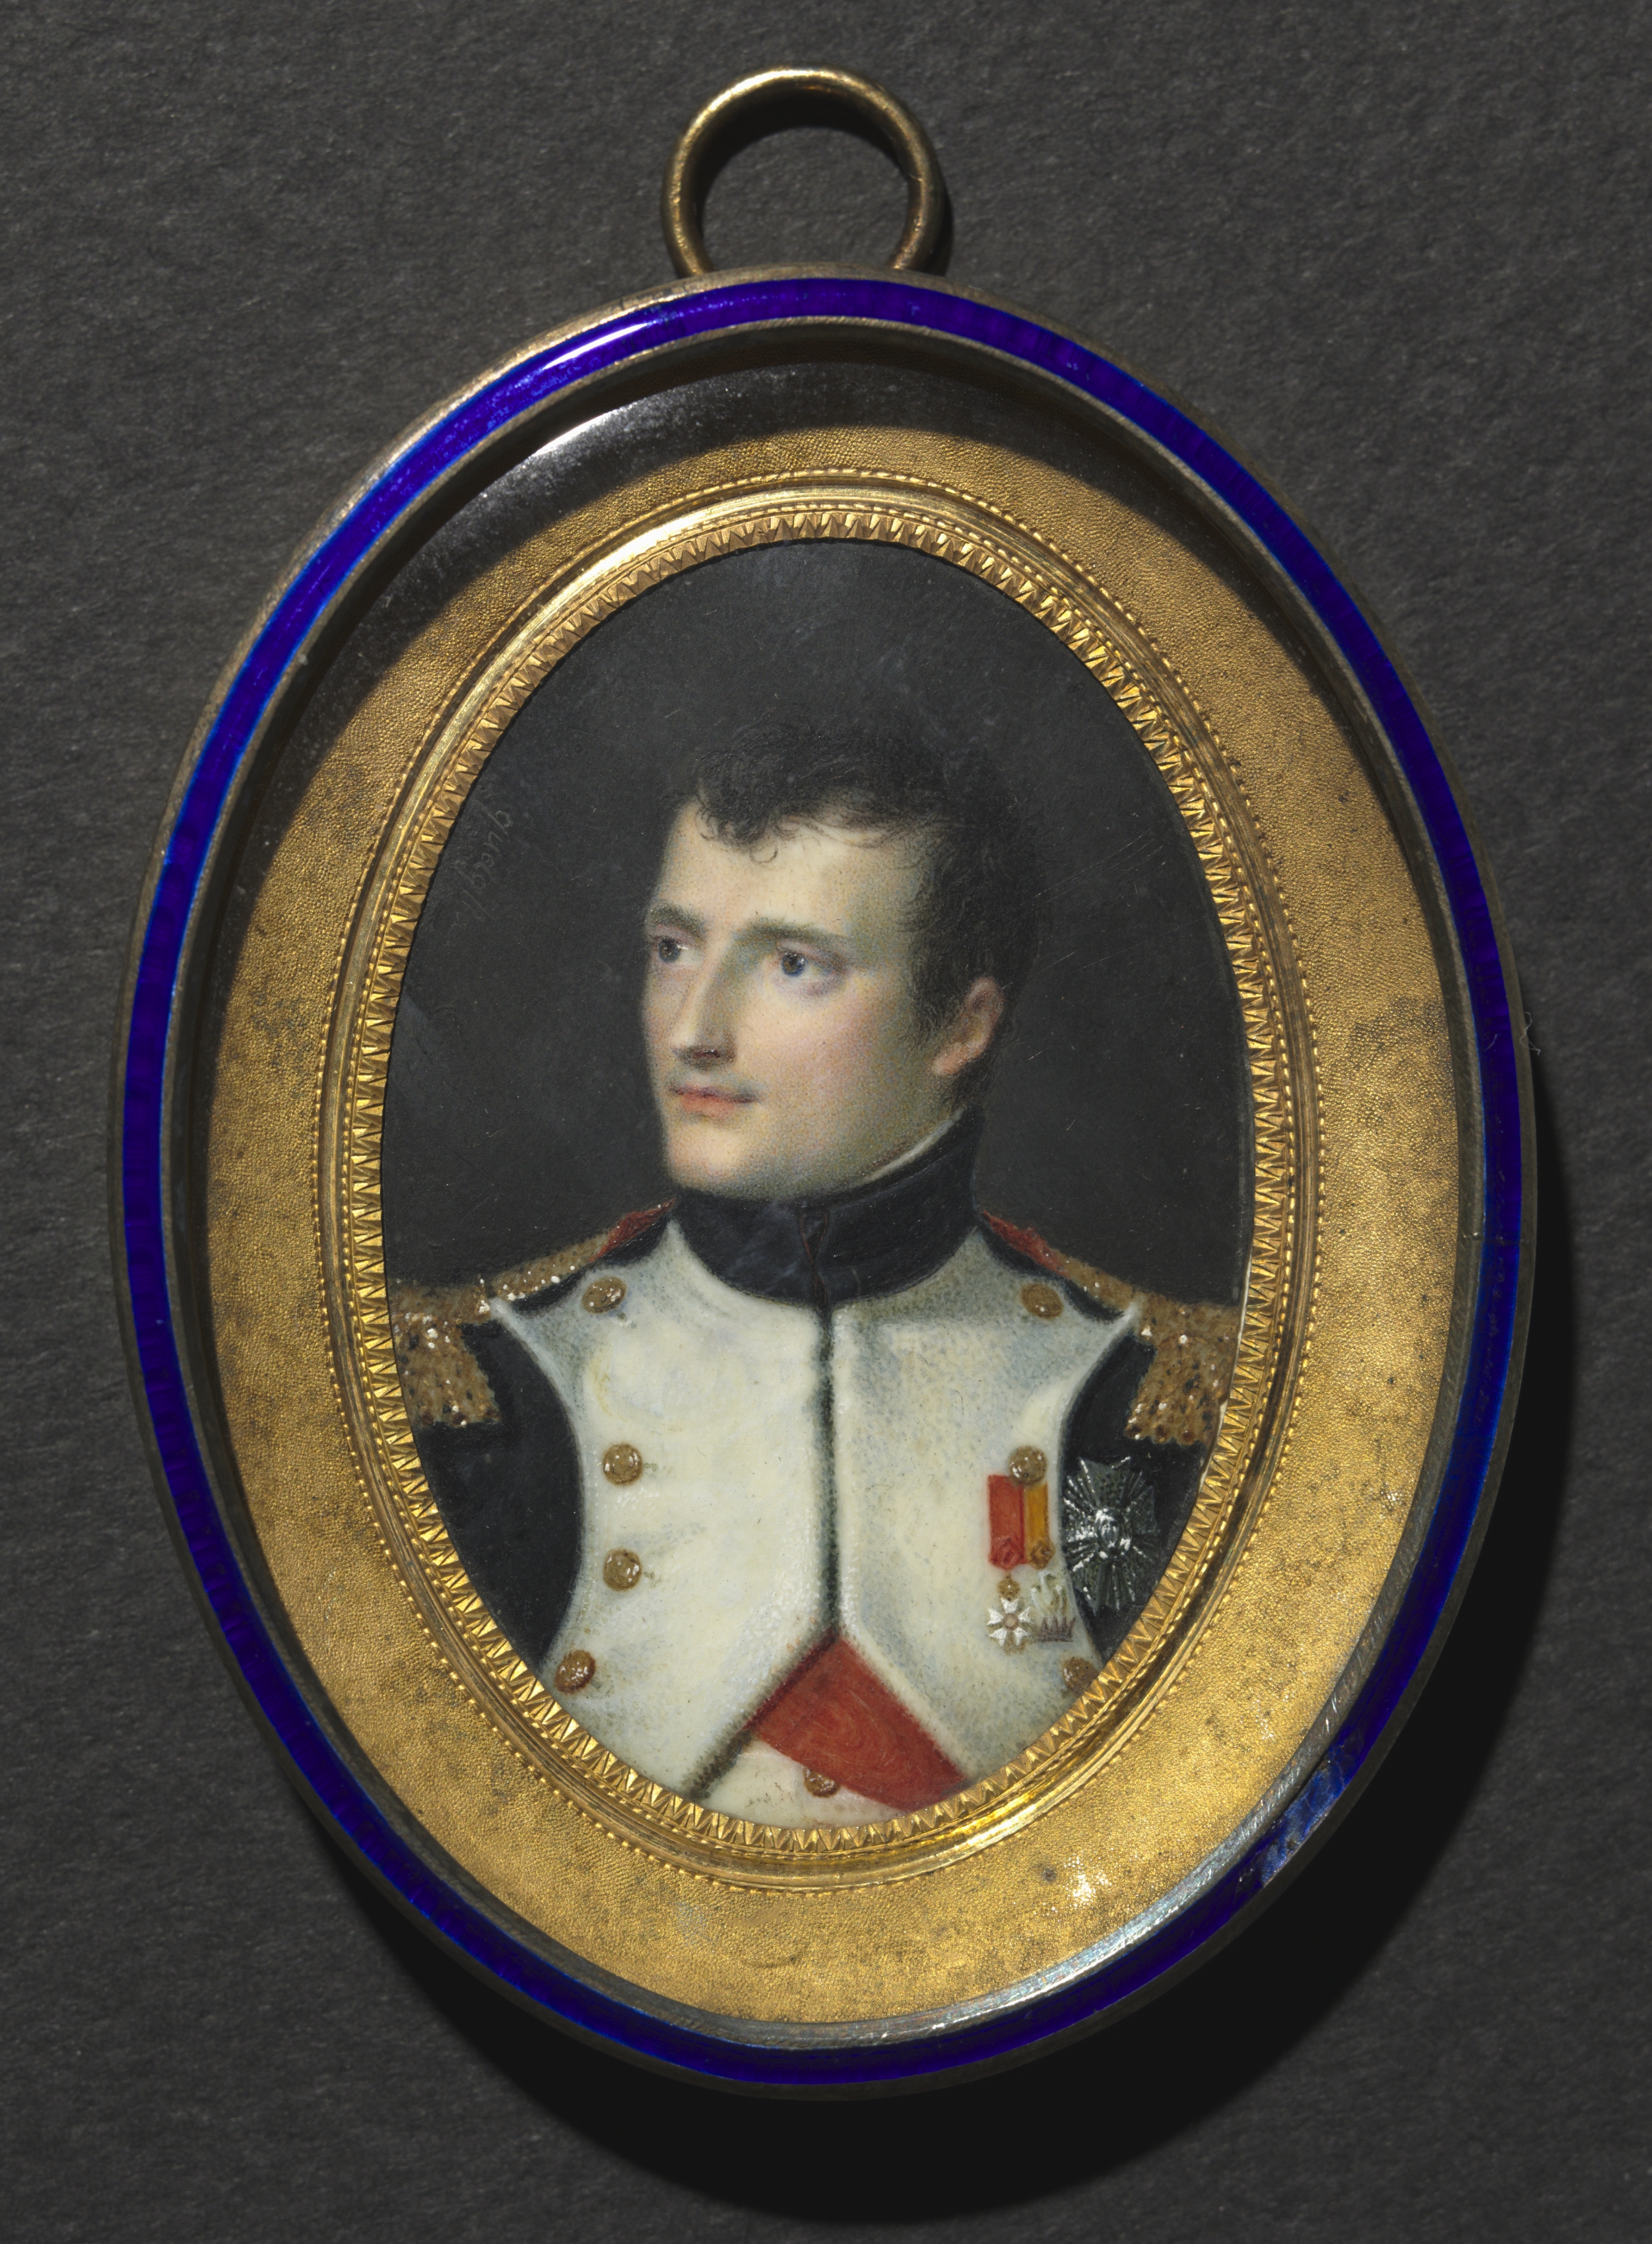 Portrait of Napoleon I, Emperor of the French